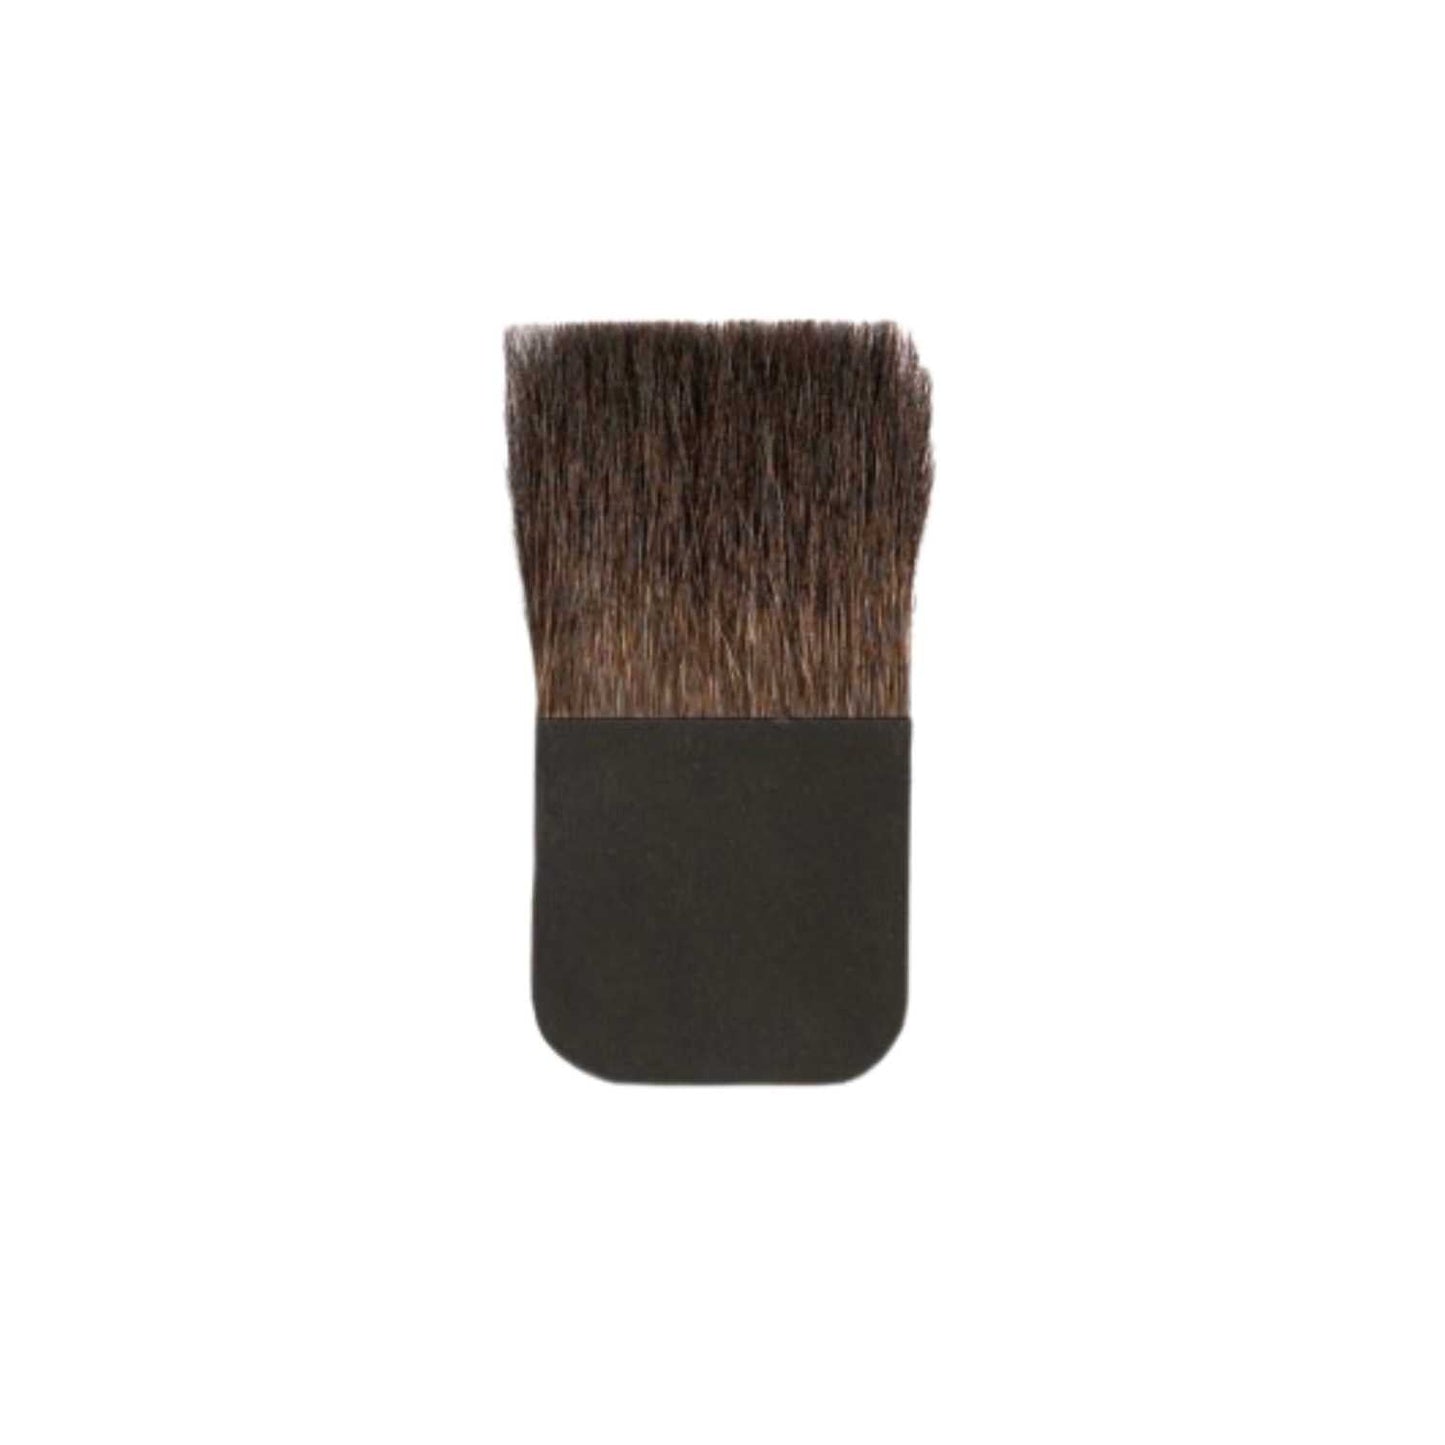 Tintoretto Specialty Brush Tintoretto - Gilder Brush - Series 2030 - Size 60